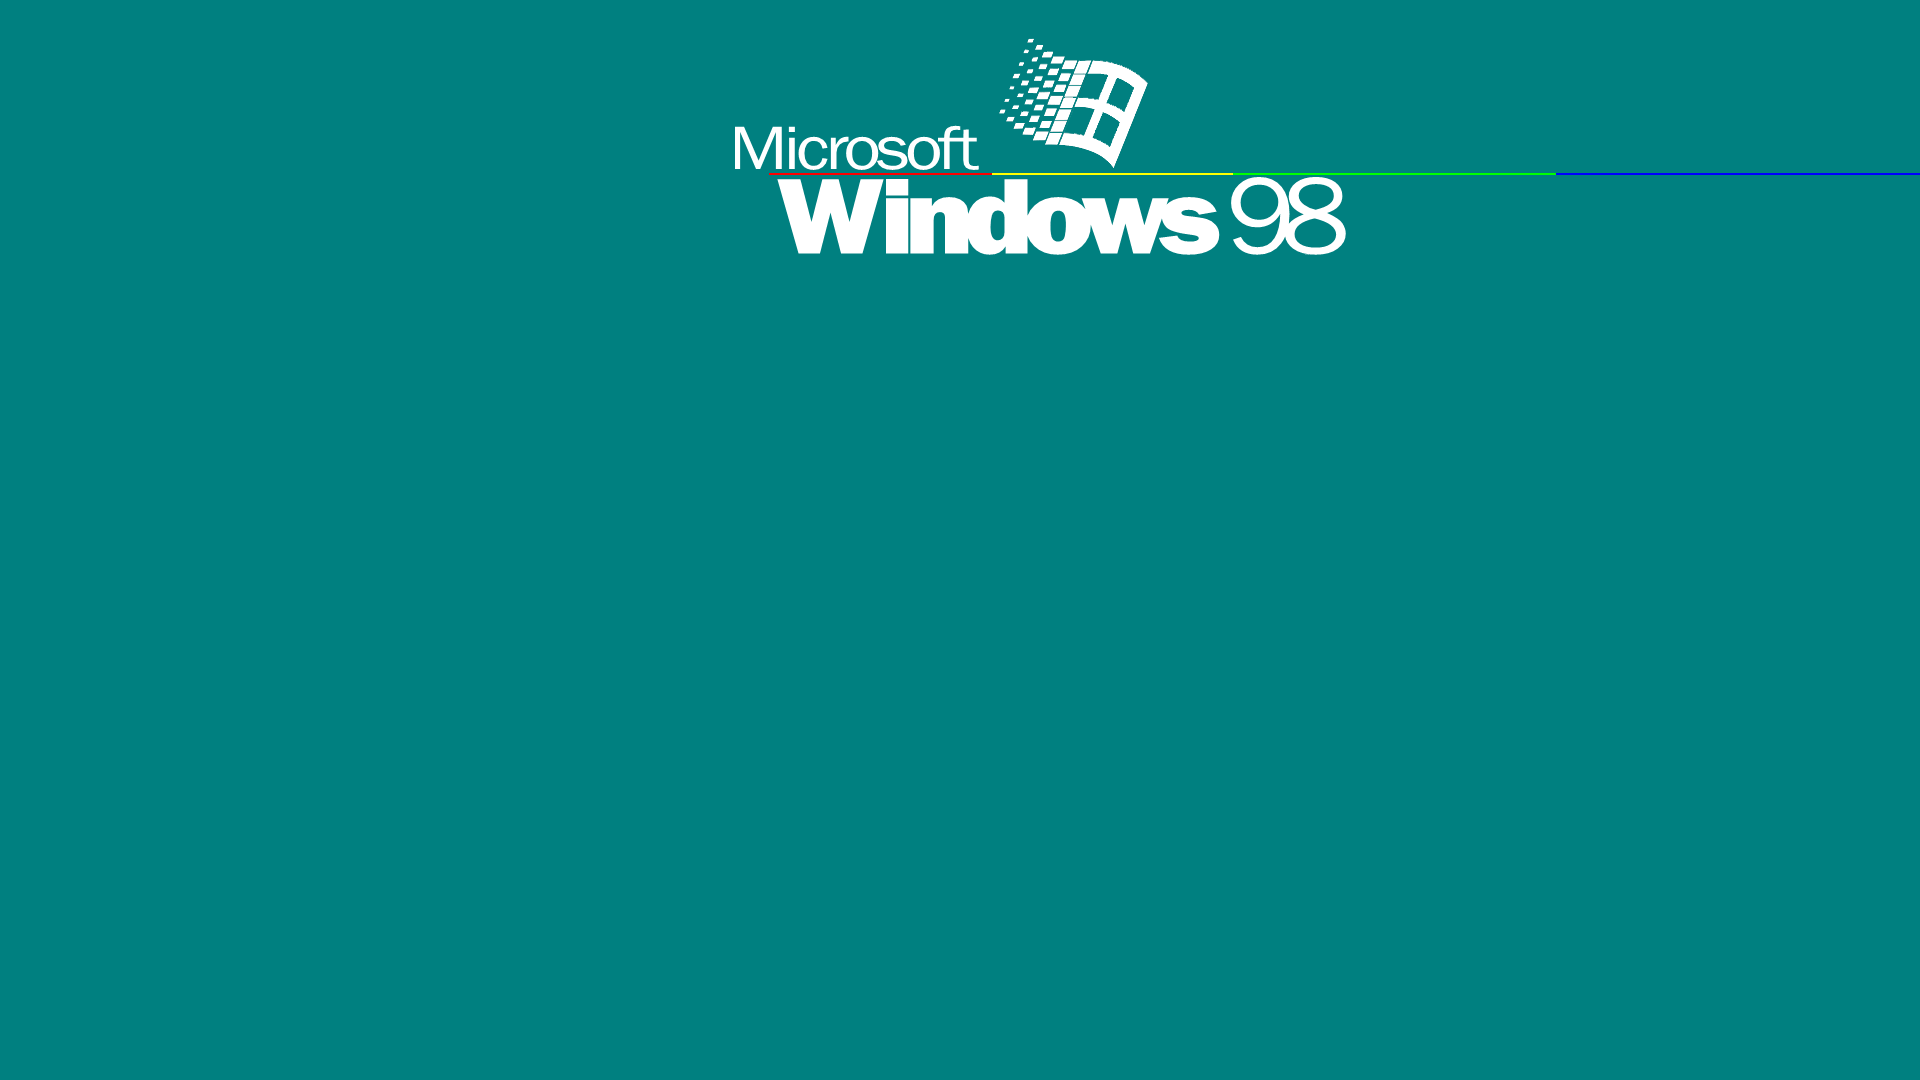 Wallpaper For > Windows 98 Wallpaper